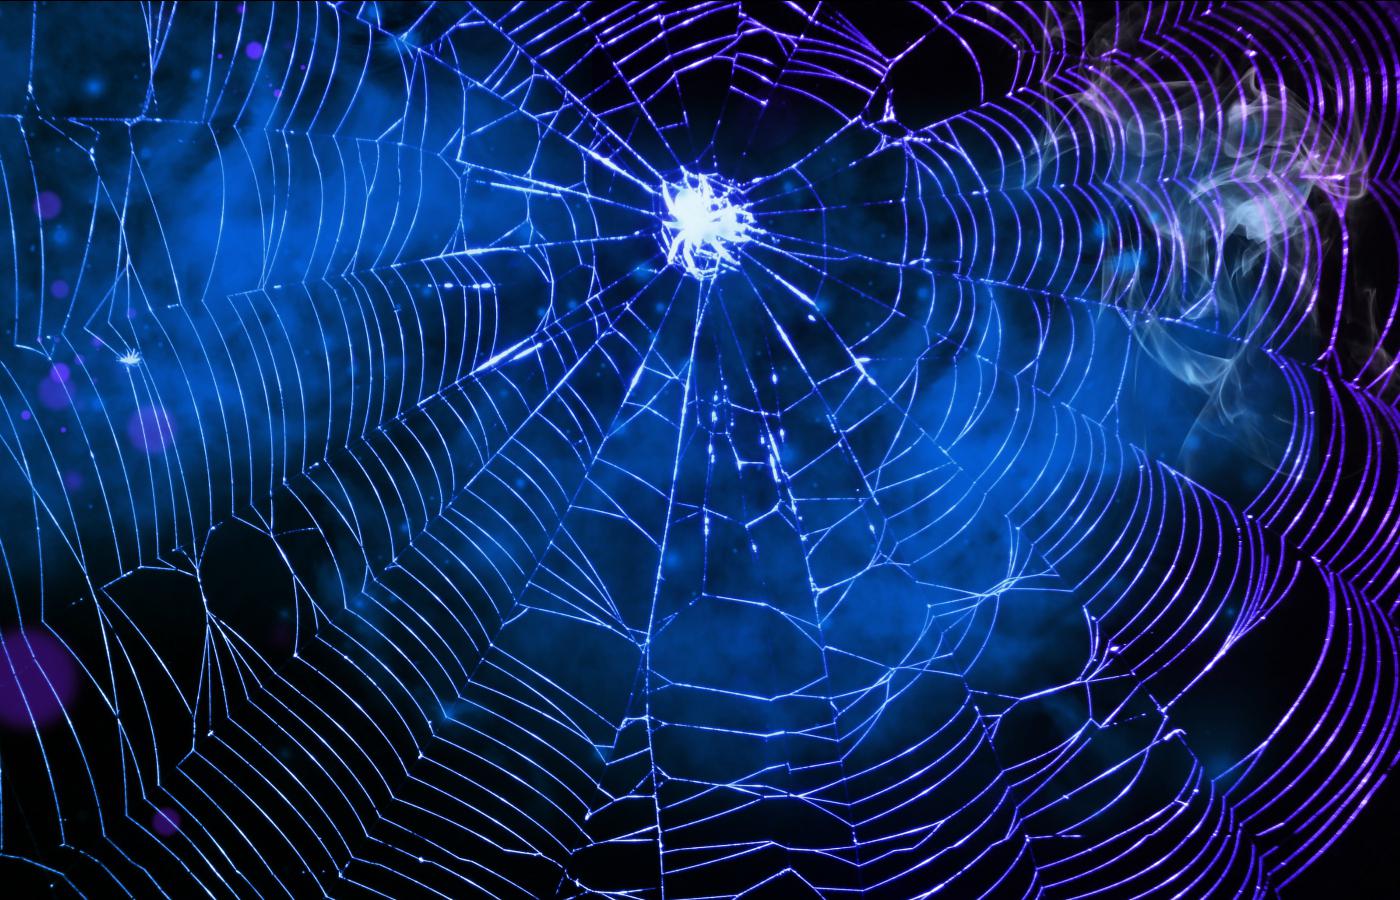 Free Download Spider Web Wallpaper 1400x900 For Your Desktop